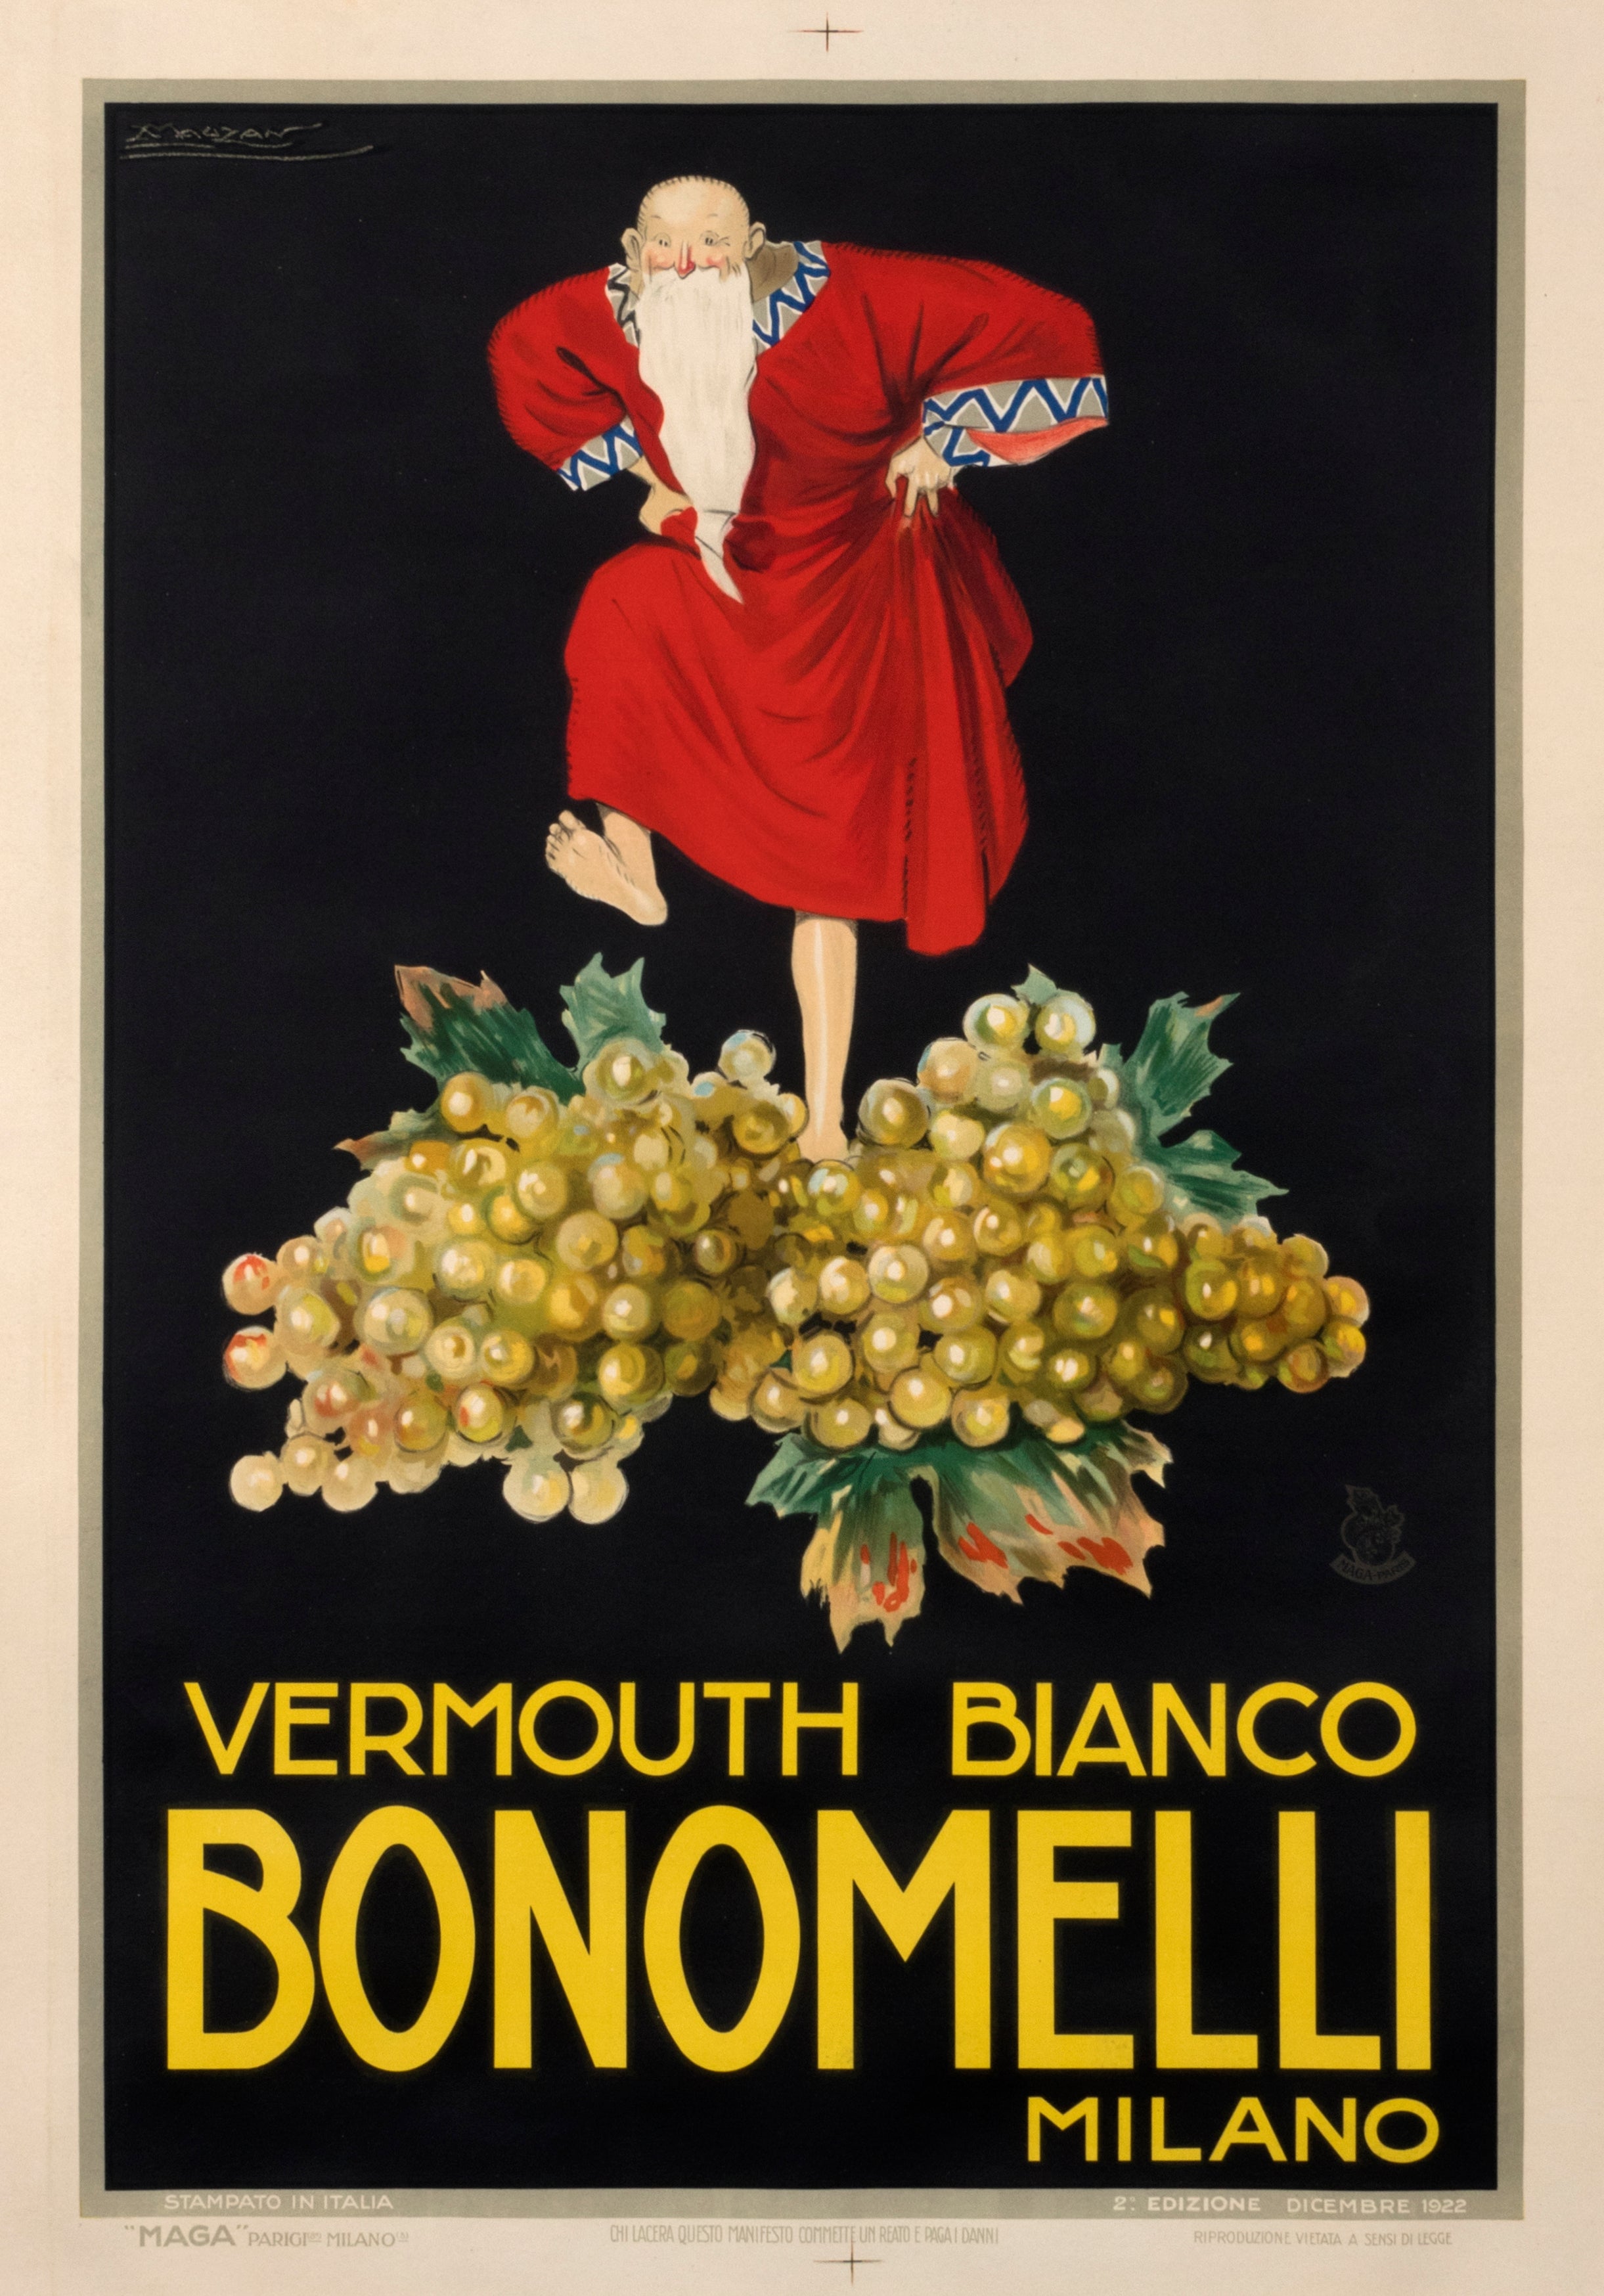 Achille Luciano Mauzan - Bonomelli Vermouth Bianco original vintage  aperitif poster For Sale at 1stDibs